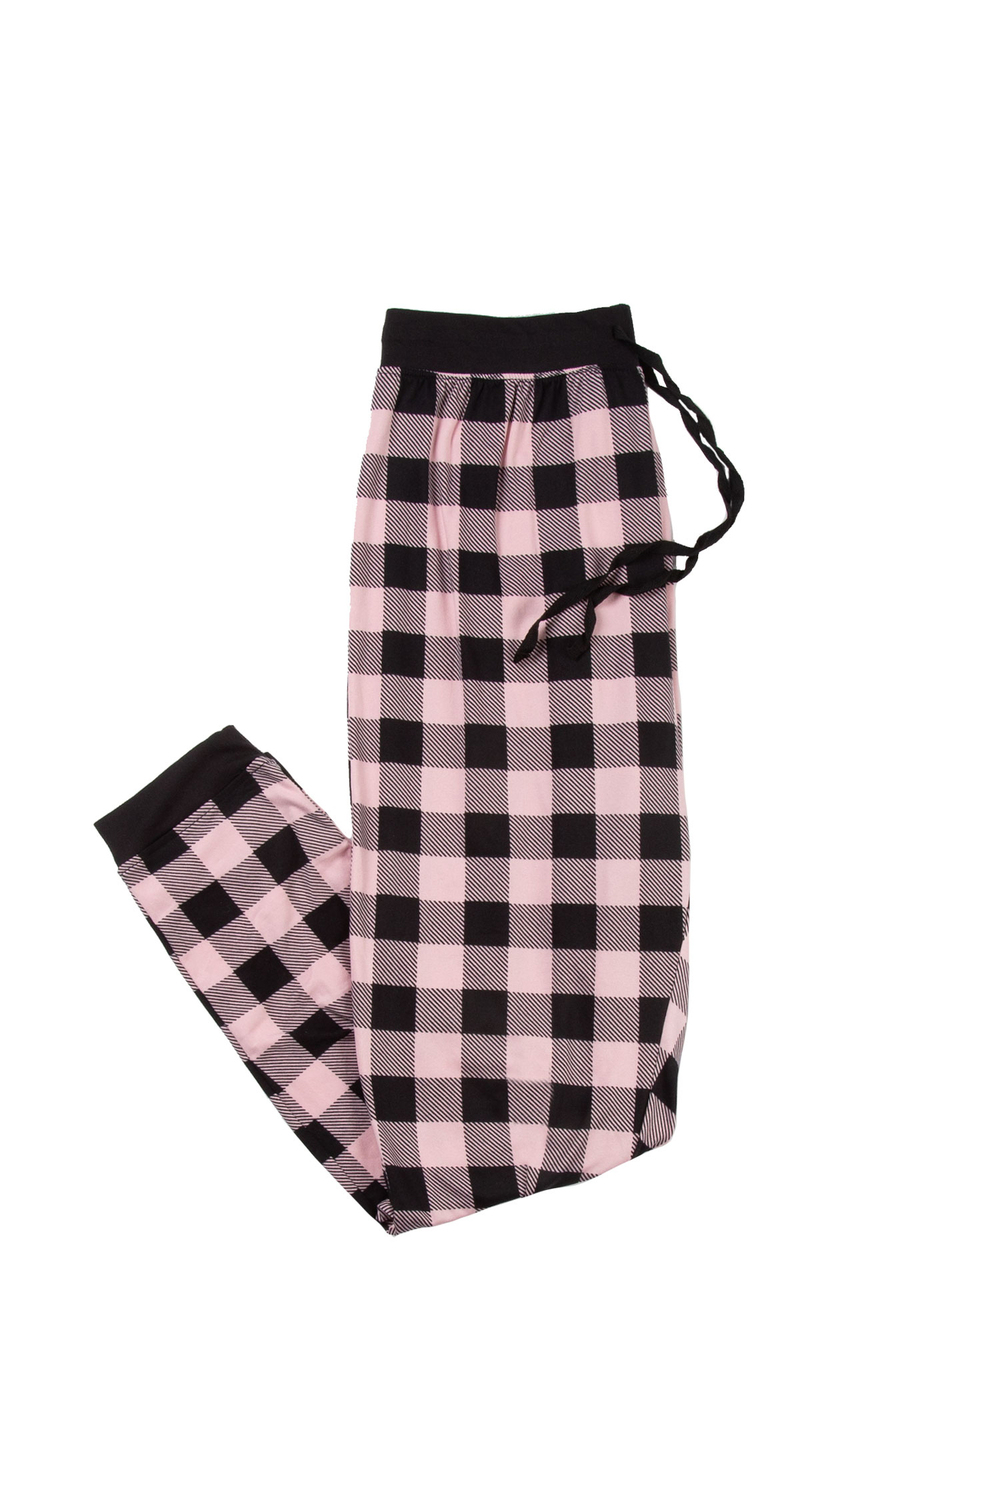 Stretch knit jogger style pajama pants, pink/black plaid, medium (M)